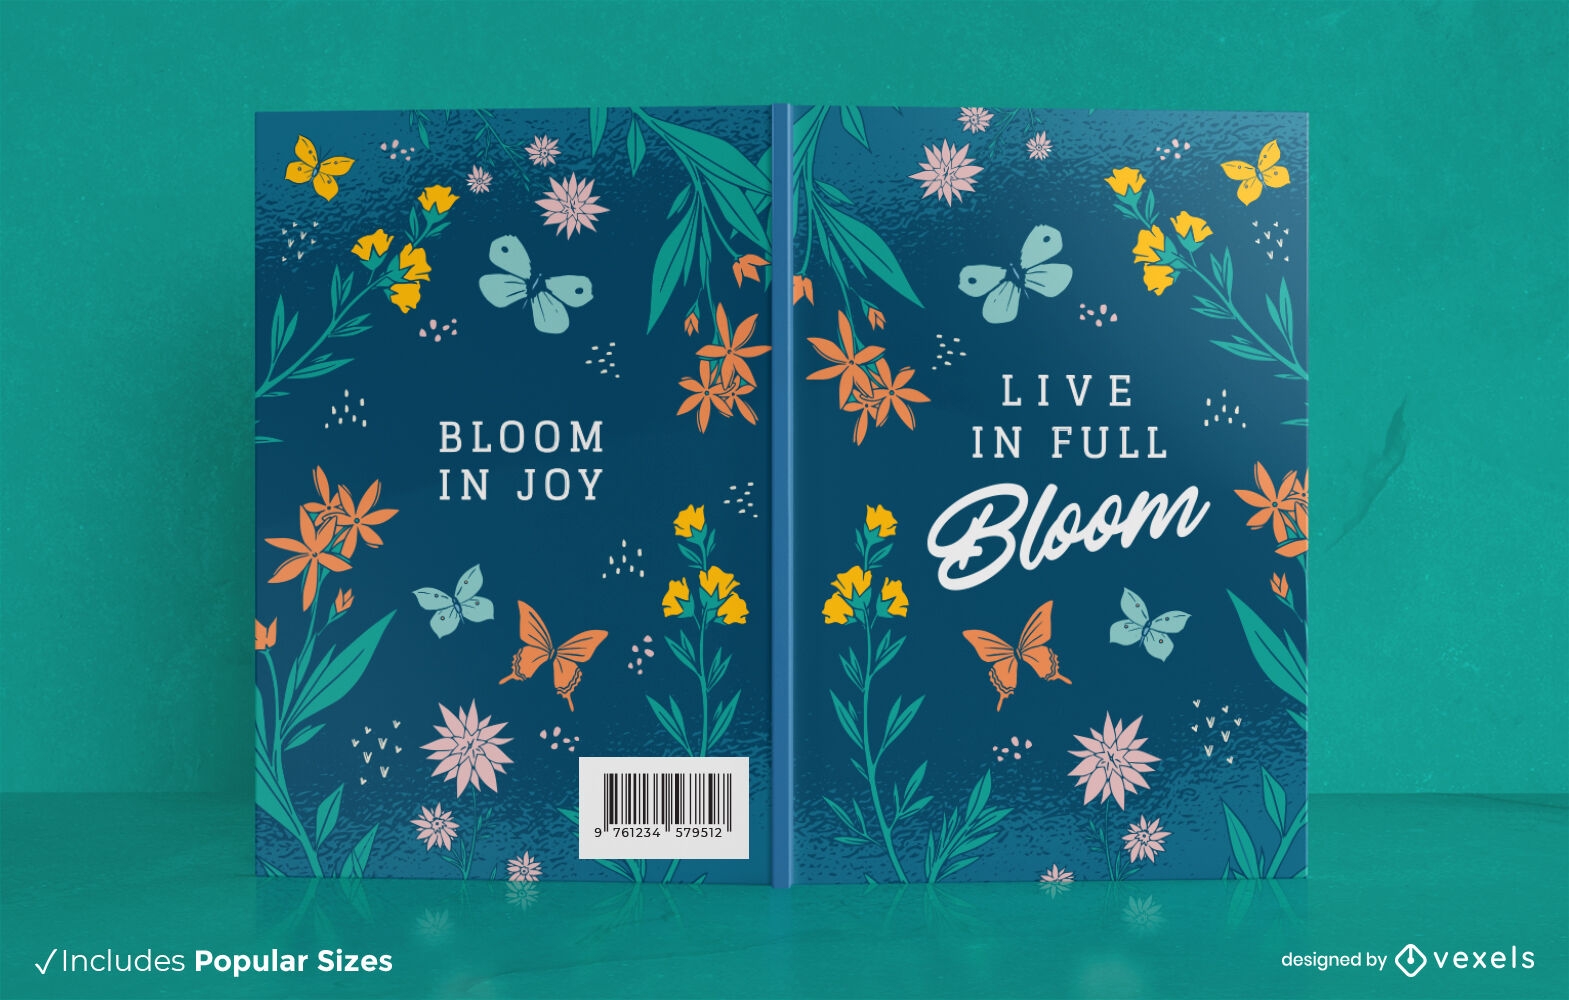 Spring bloom book cover design